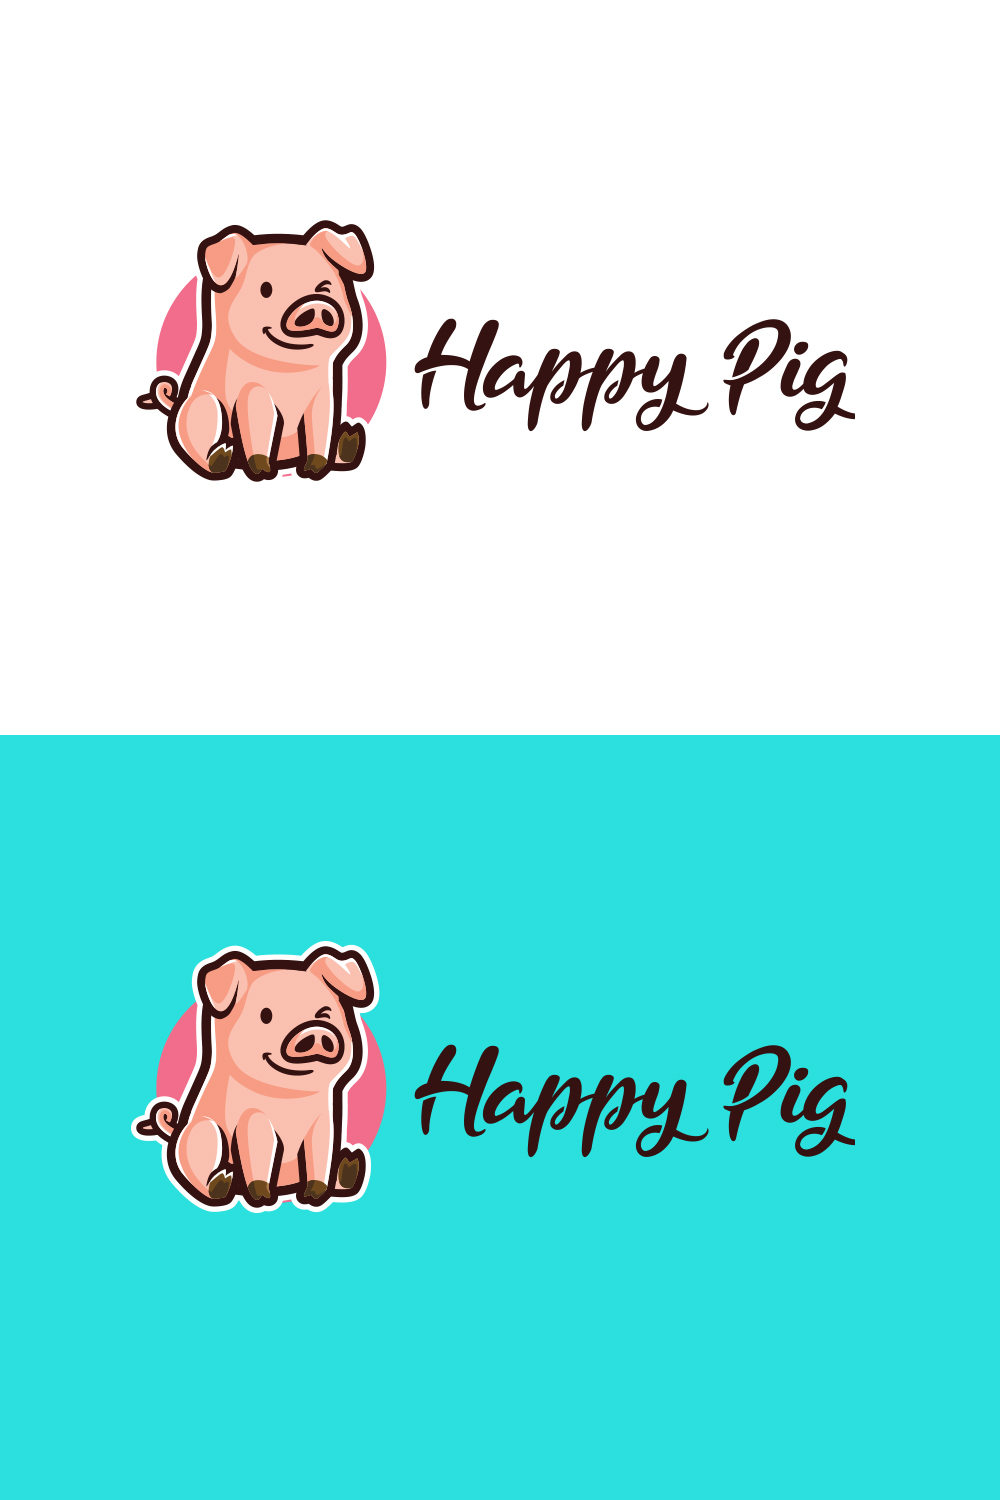 Happy pig Logo Design pinterest preview image.